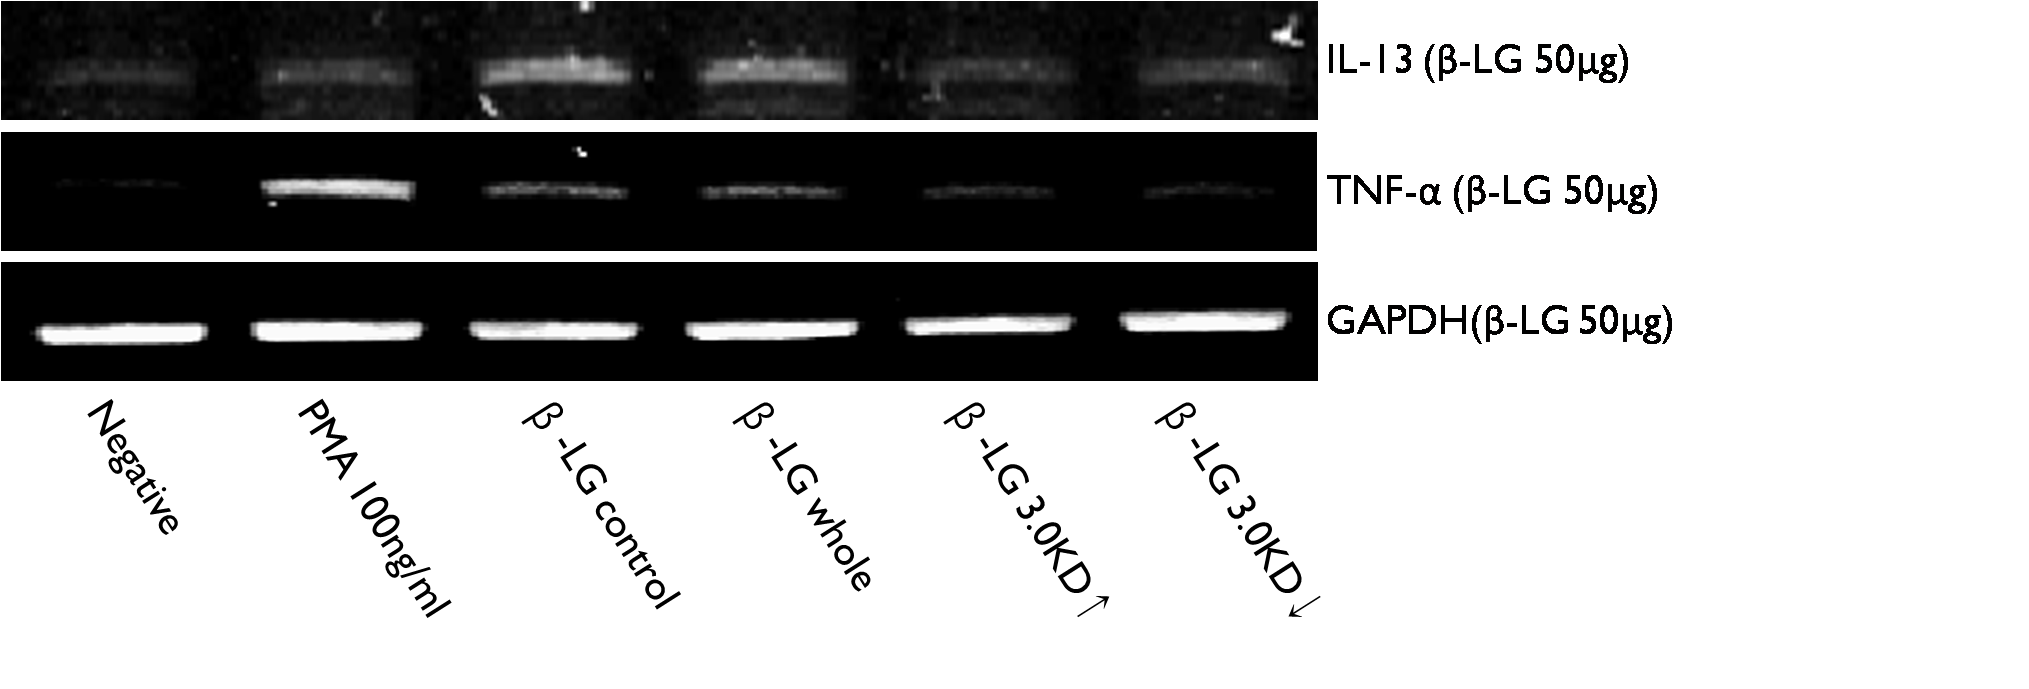 RBL-2H3 cell에 α-Lactoglobulin을 50μg 처리하였을 경우 발현되는 TNF-α, IL-13